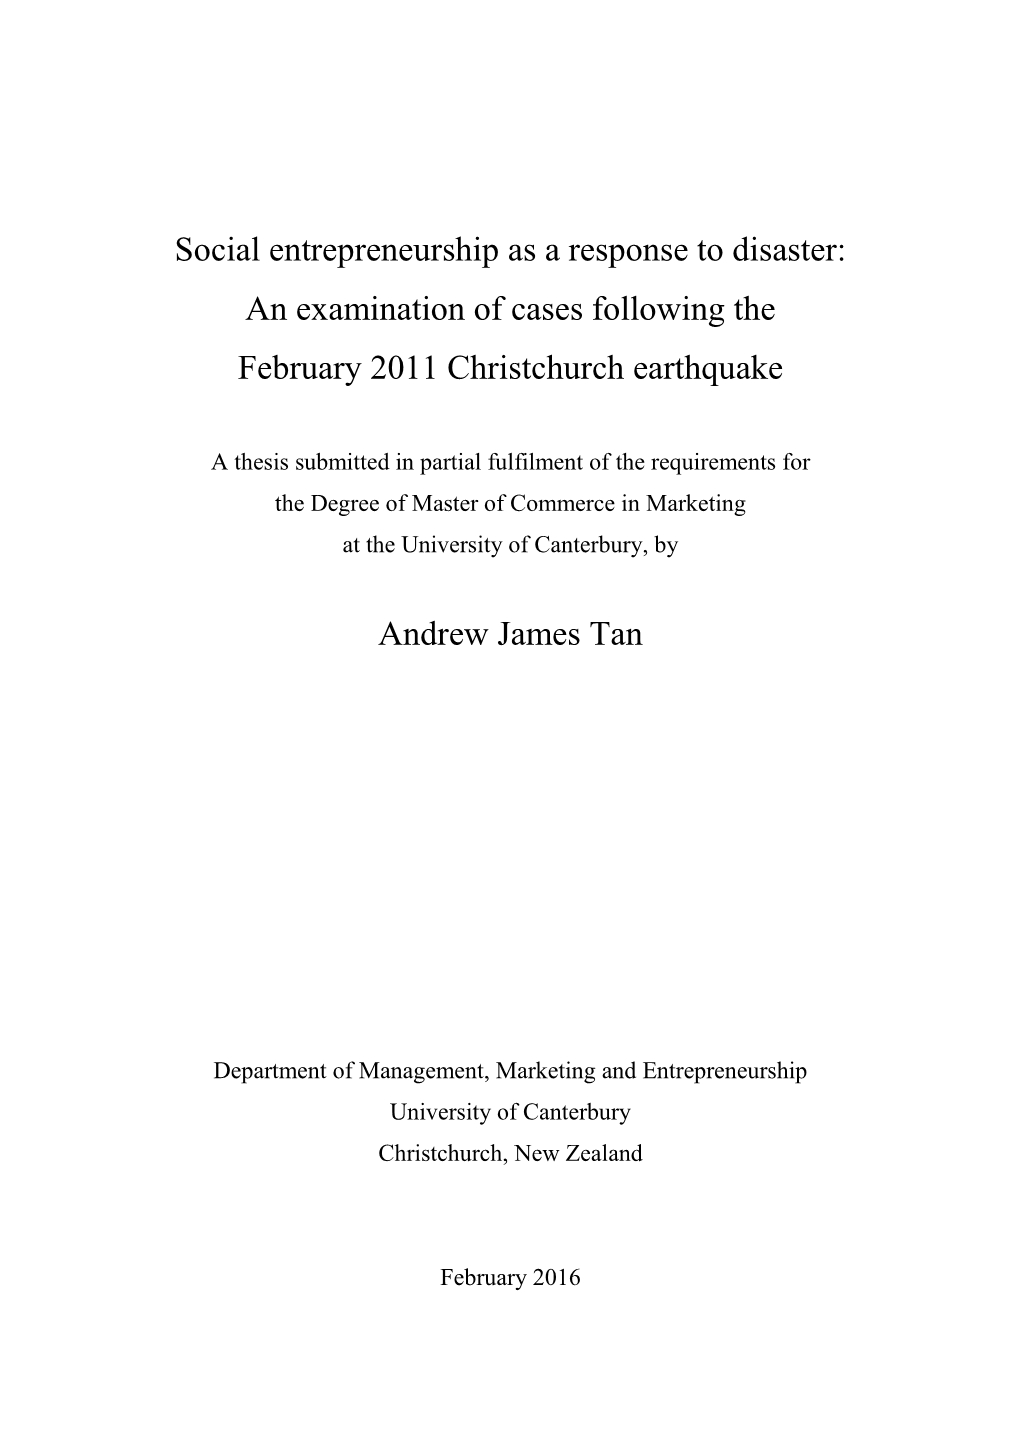 Social Entrepreneurship As a Response to Disaster: an Examination of Cases Following the February 2011 Christchurch Earthquake